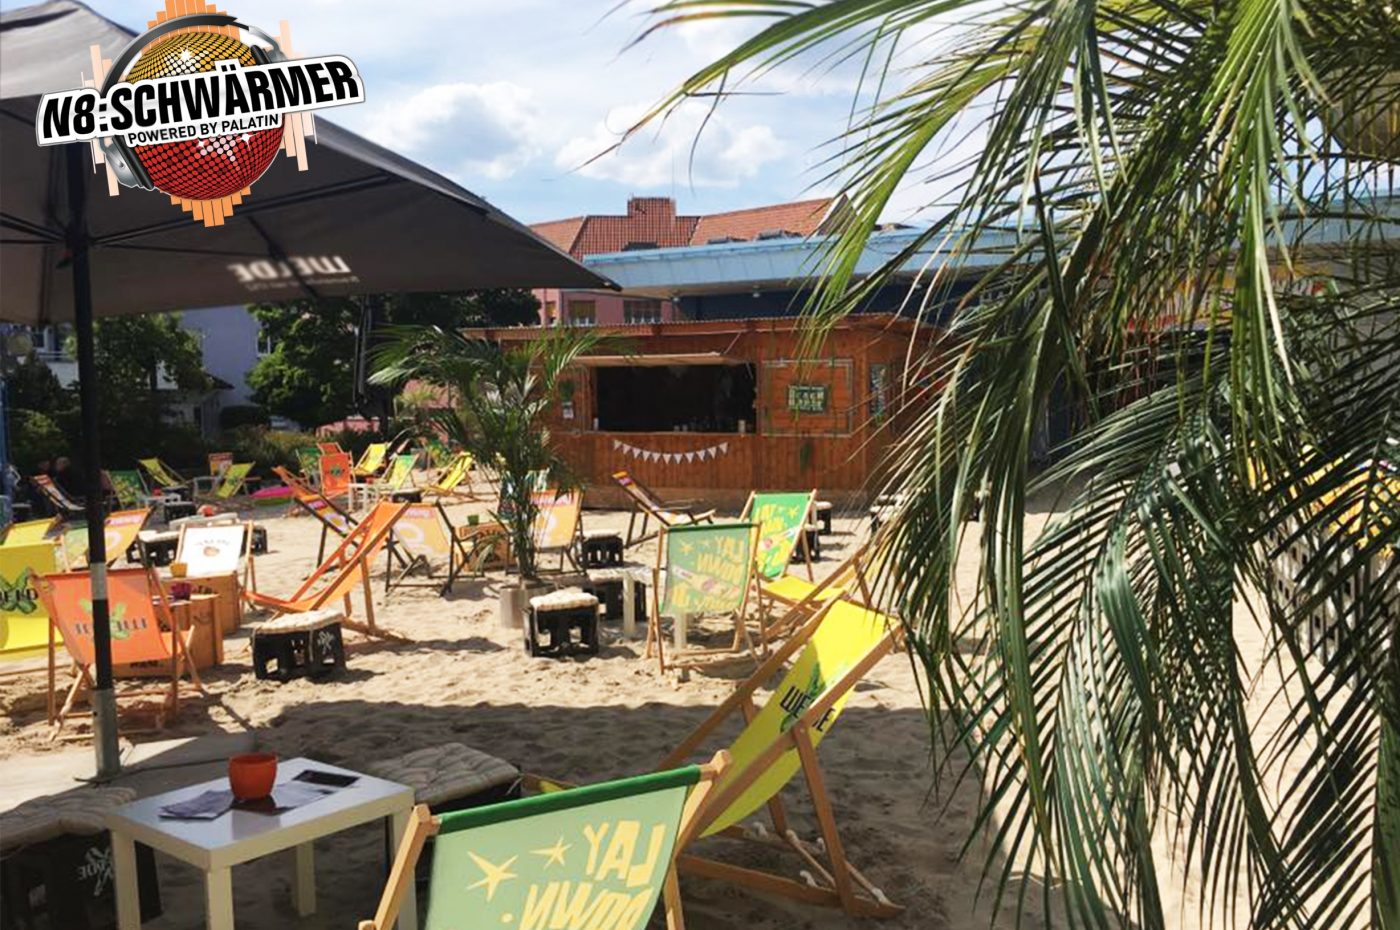 Karibik-Feeling mitten in Wiesloch – Sommer, Sand, Palatin-Strand